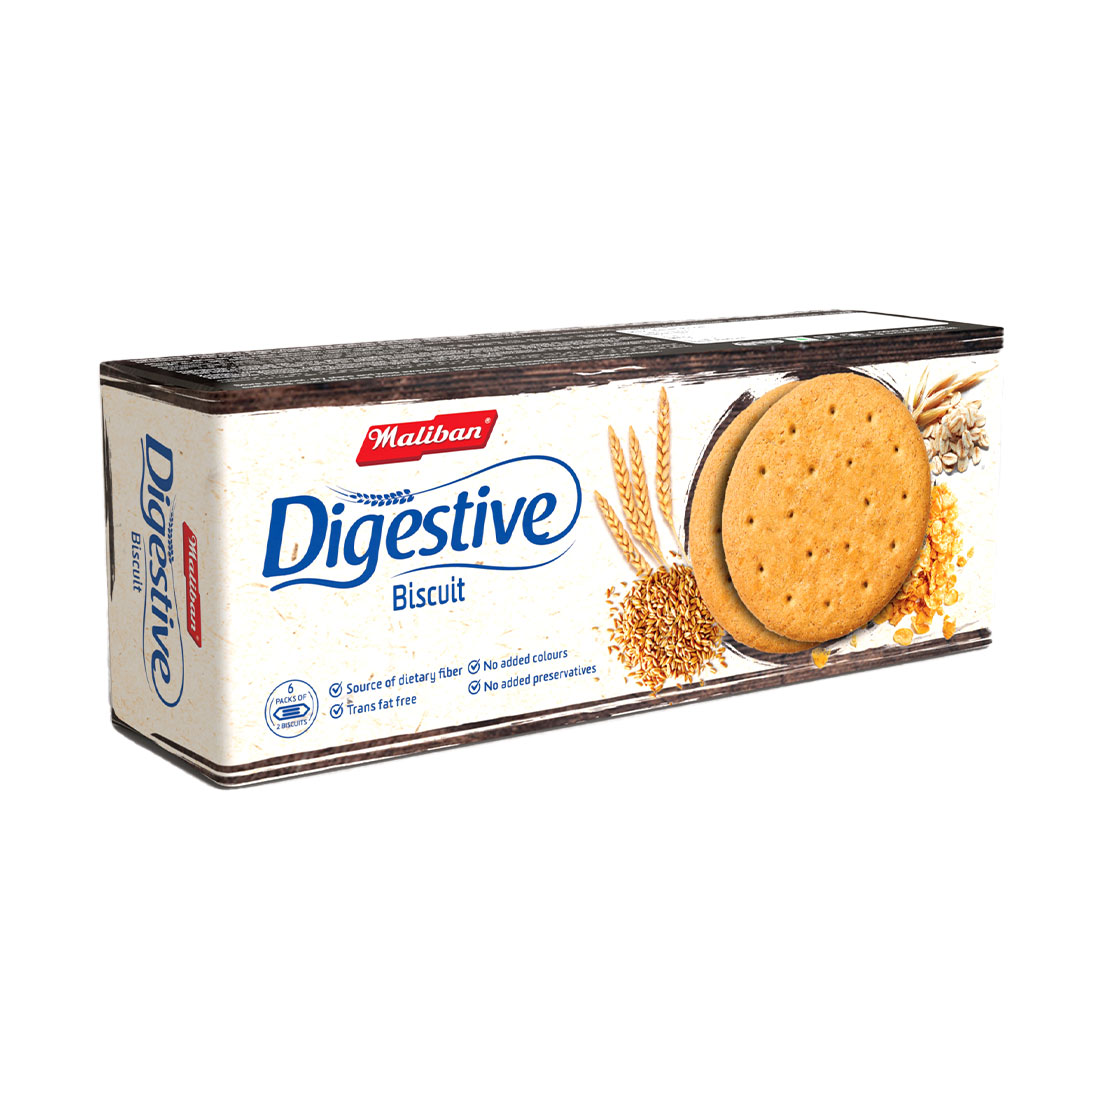 MALIBAN - Digestive Biscuit